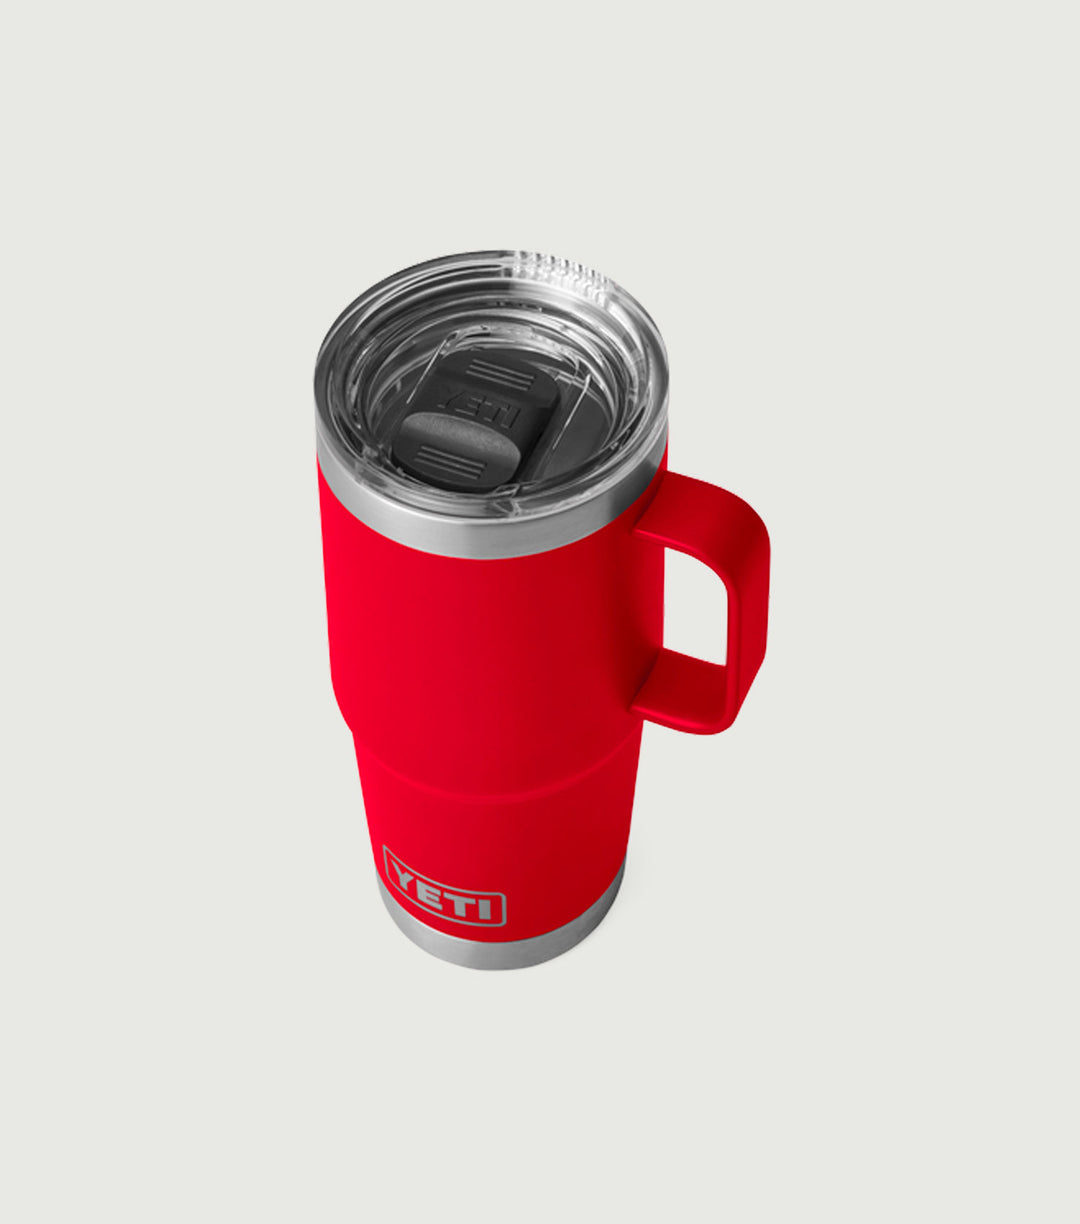 Rambler® 20 oz (591 ml) Travel Mug Red - Yeti